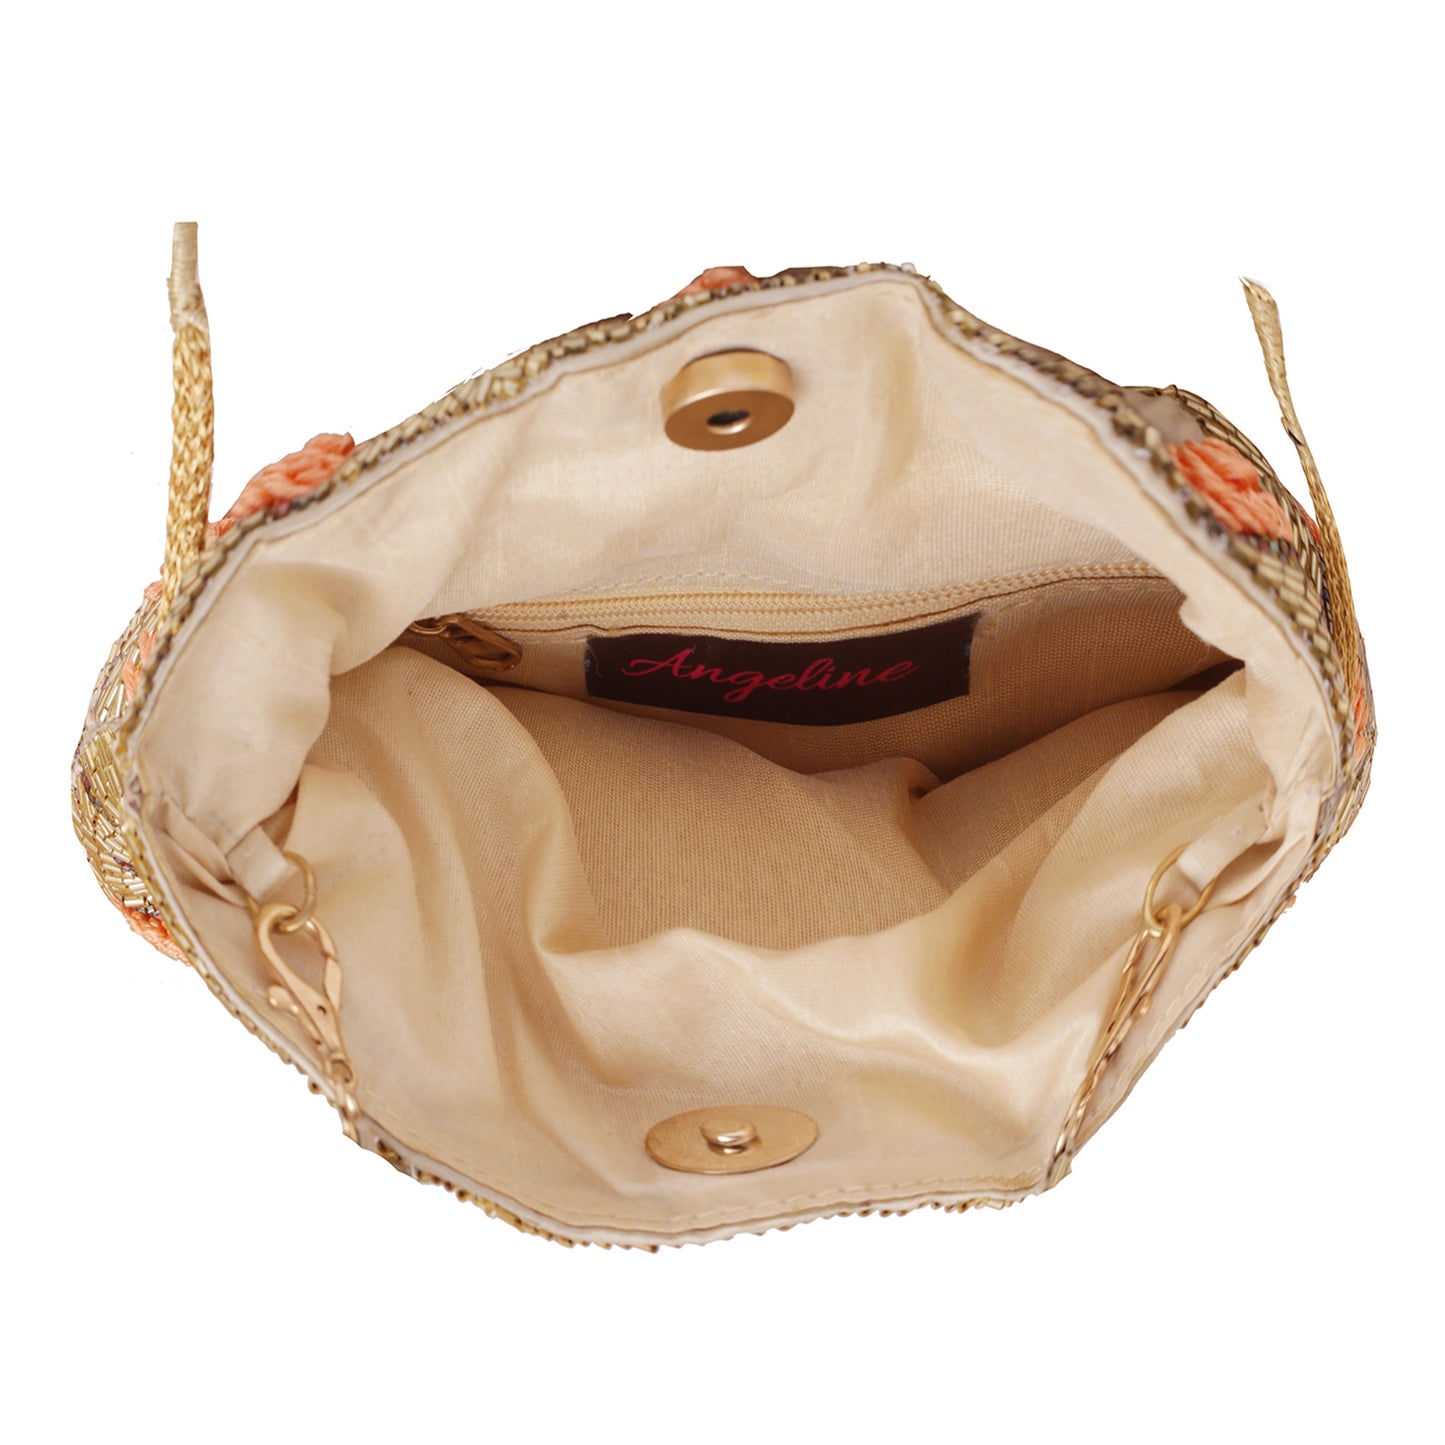 Angeline's Golden Love Potli Bag